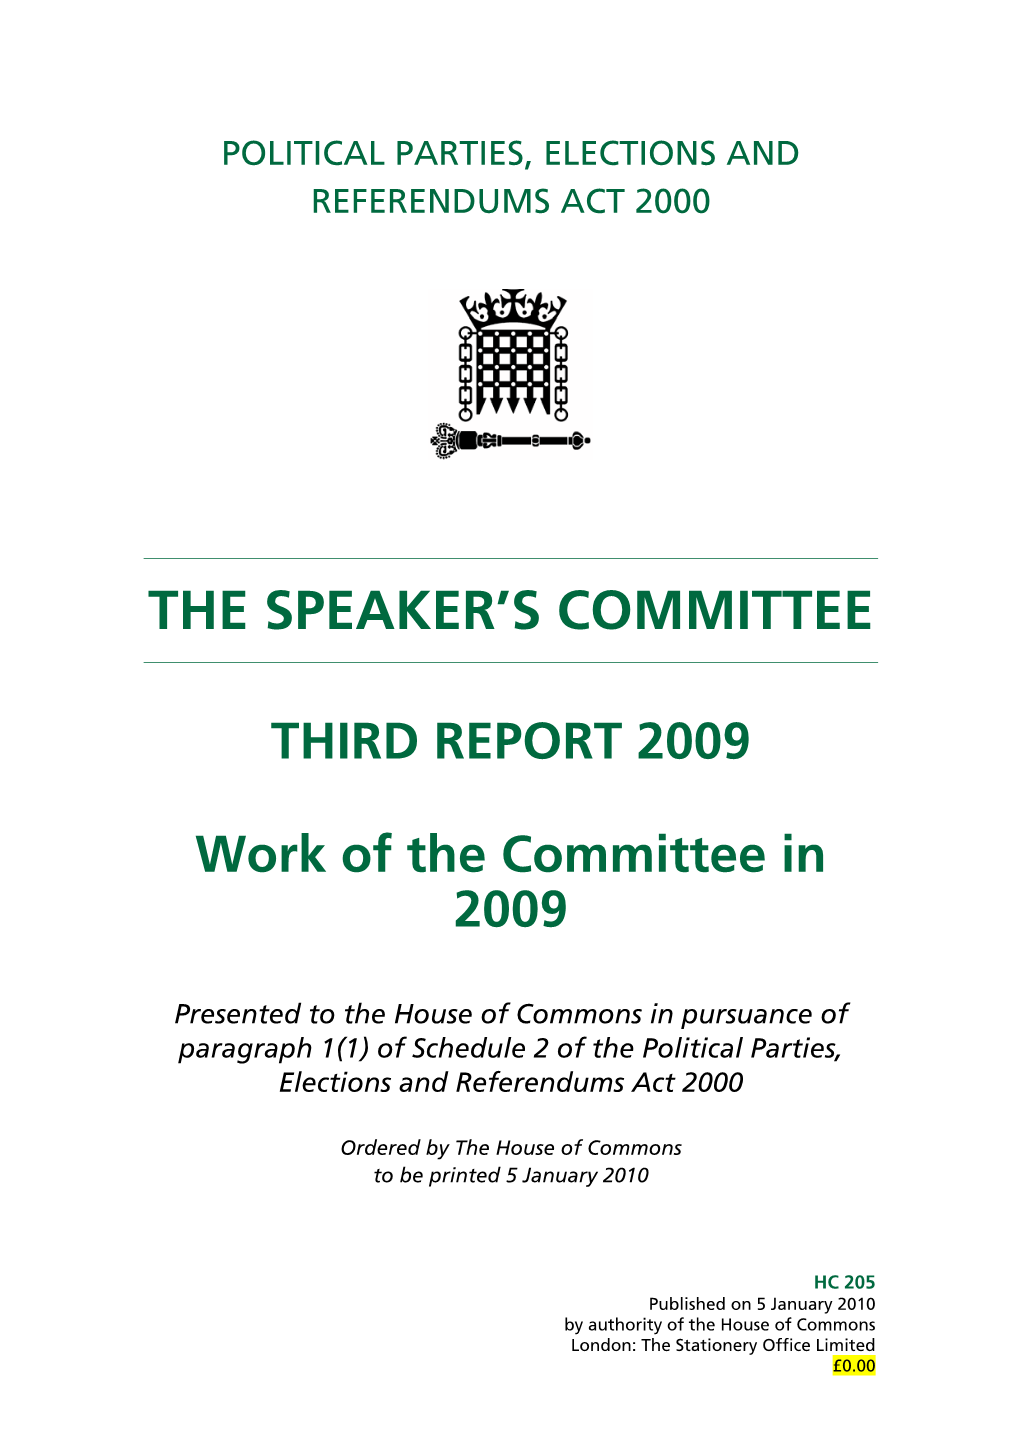 The Speaker's Committee